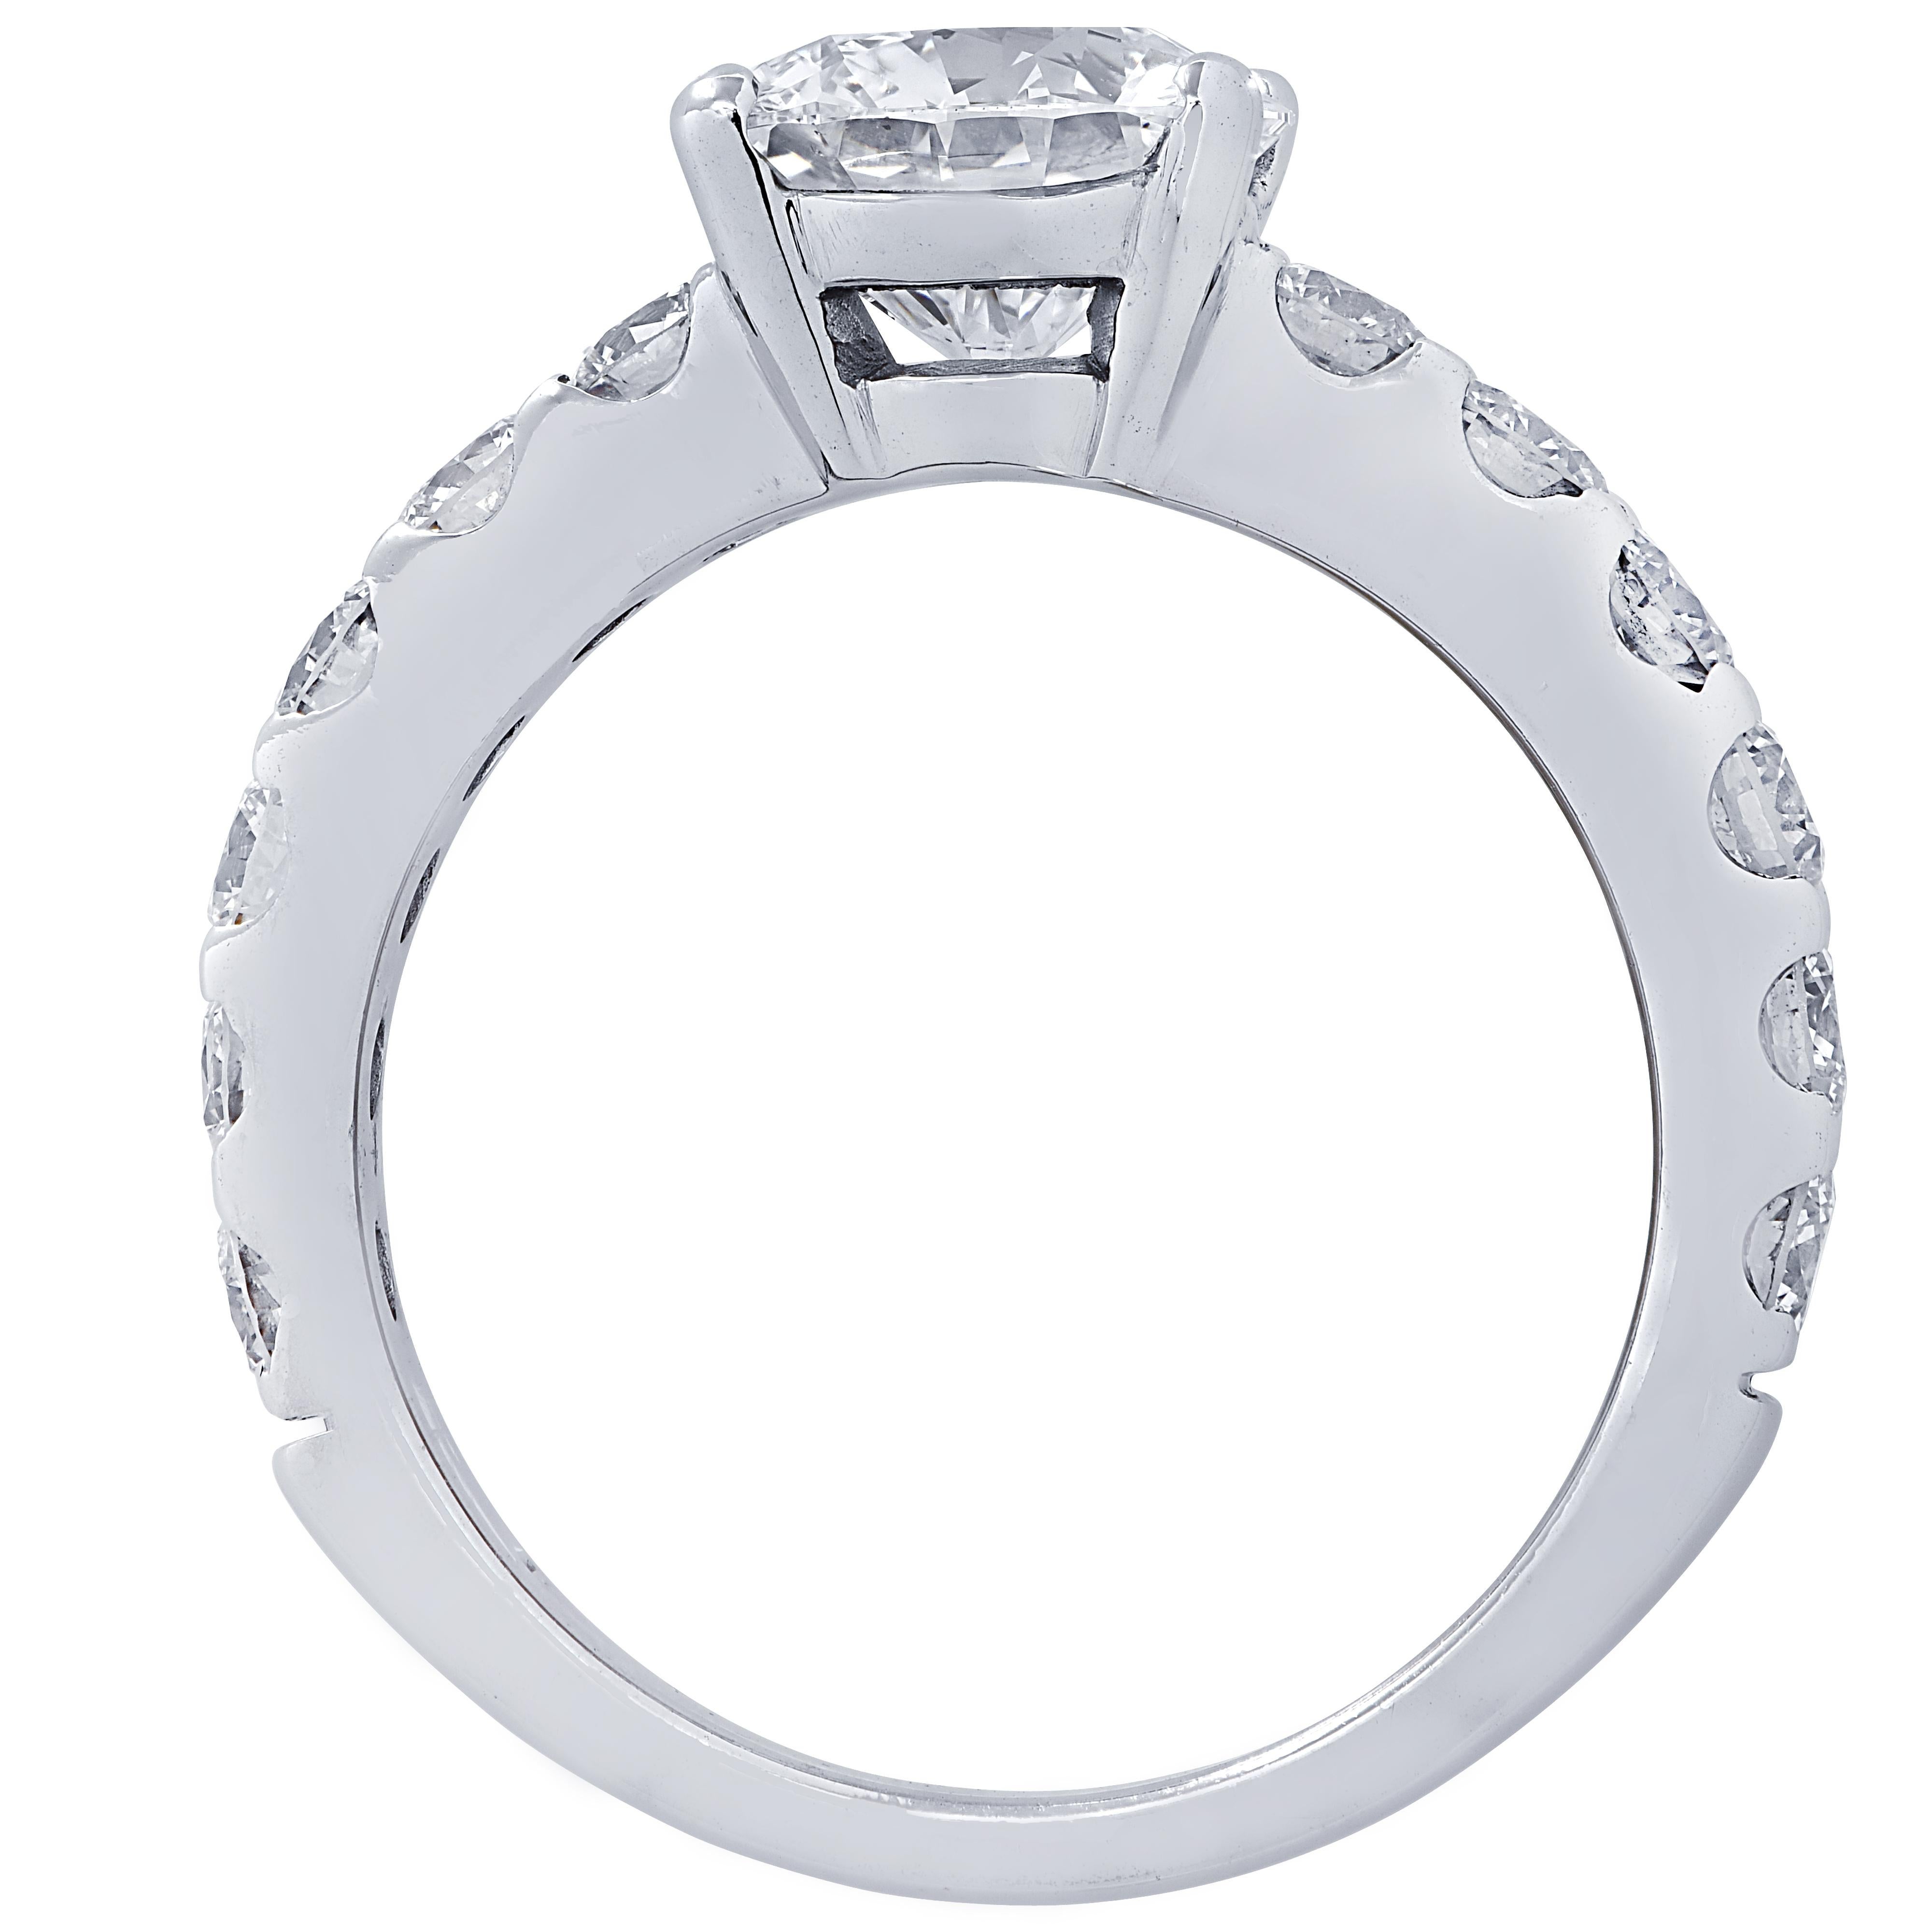 Round Cut Vivid Diamonds GIA Certified 1.65 Carat Diamond Engagement Ring